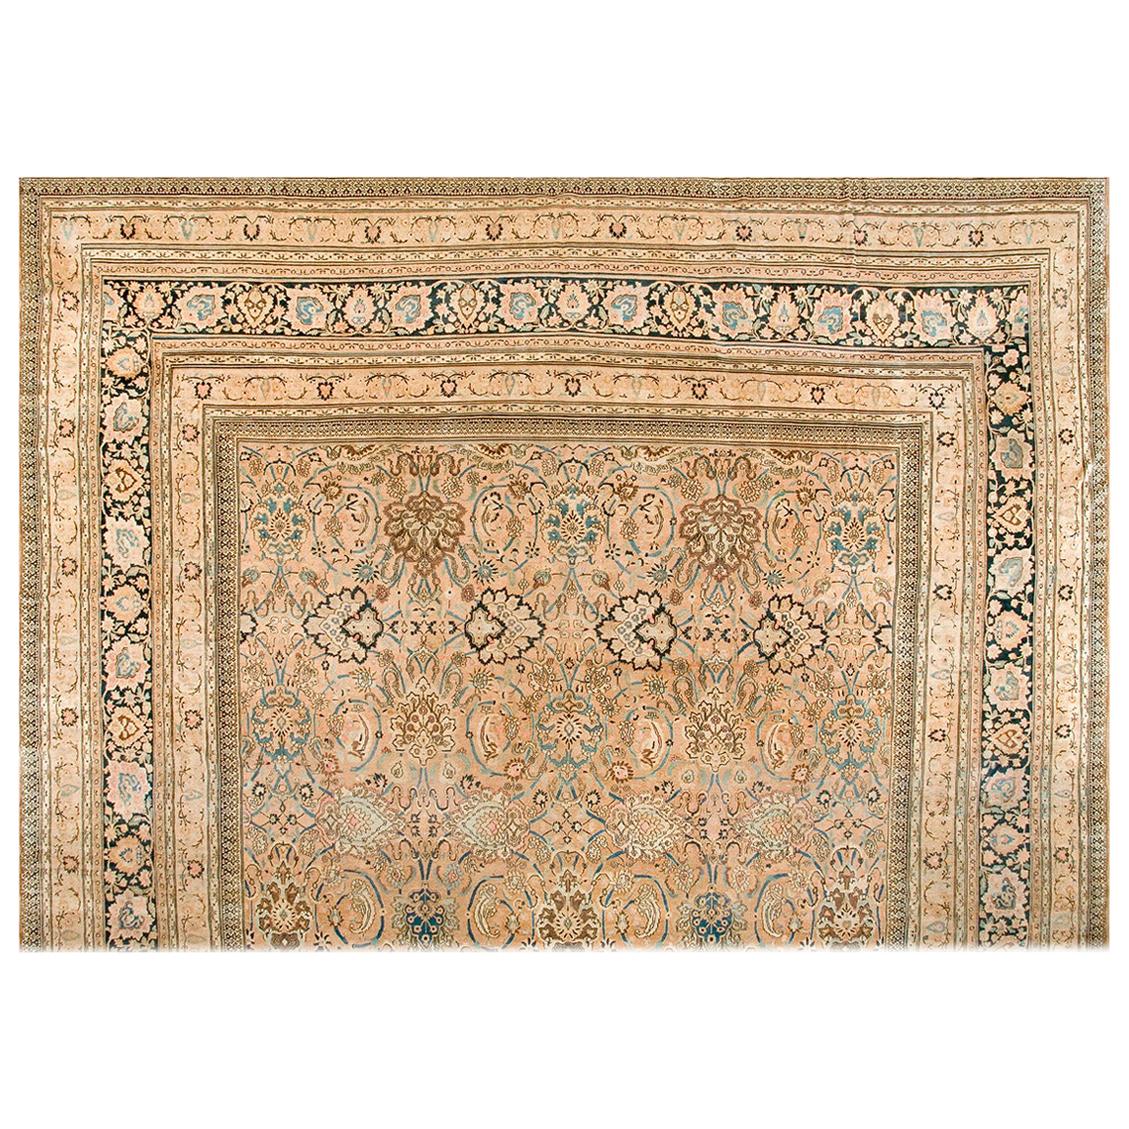 Late 19th Century N.E. Persian Khorasan Moud Carpet (20'3" x 30'4" - 618 x 925)